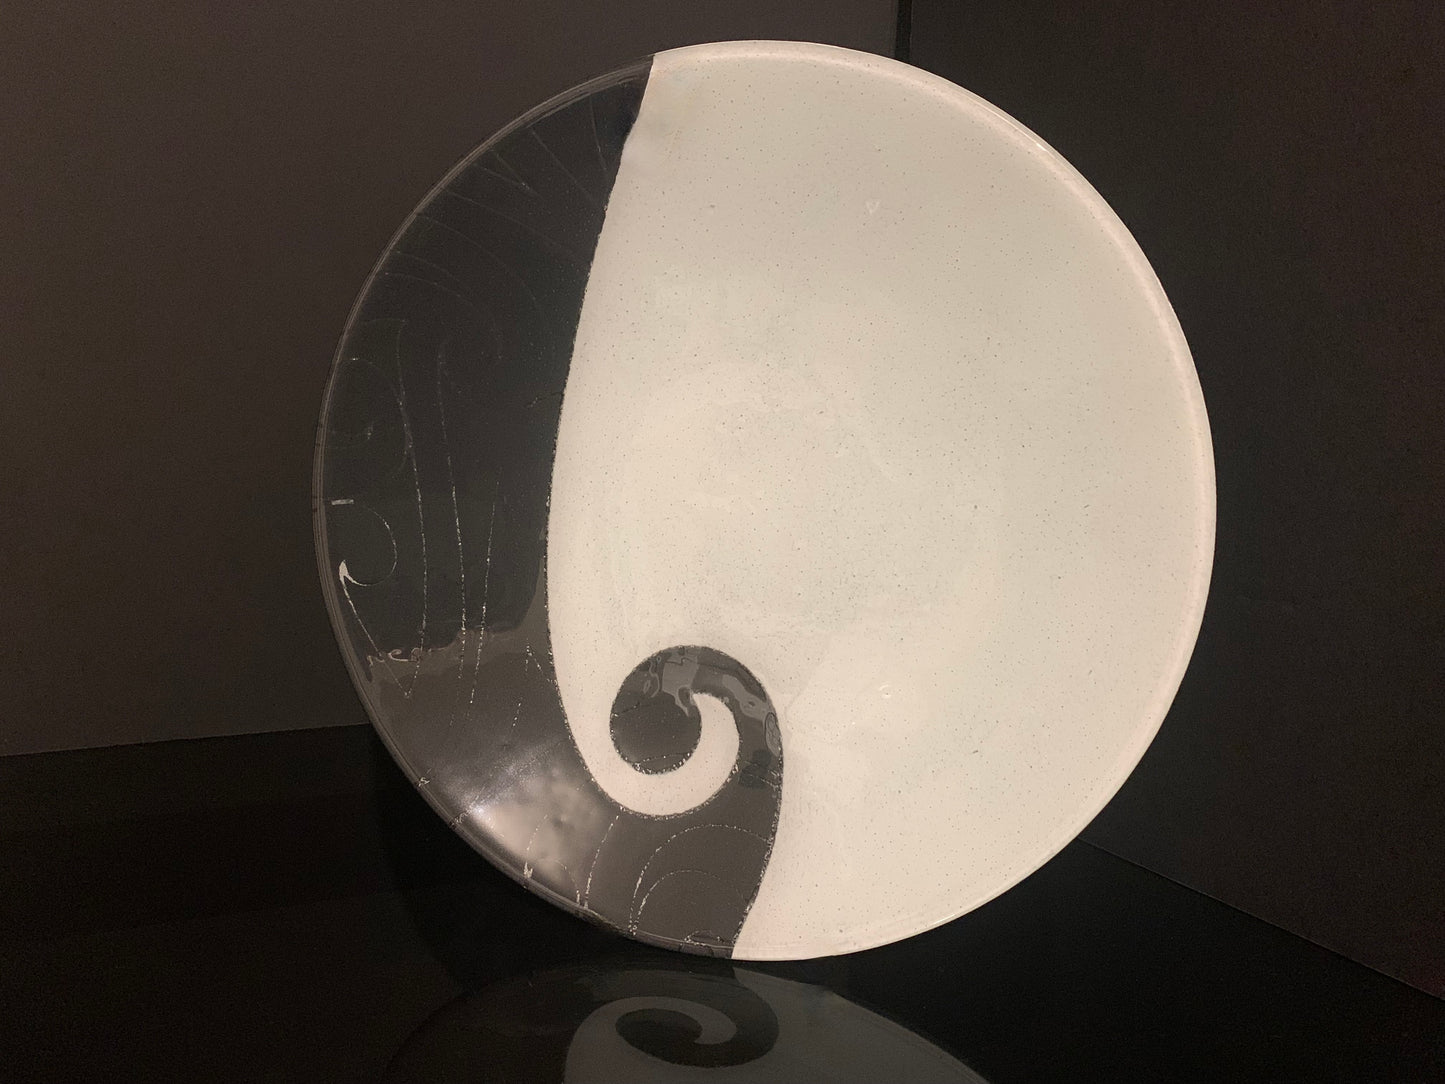 Fused Glass Bowl by Maori Boy - Koru Furl Design (white and graphite) 32cm